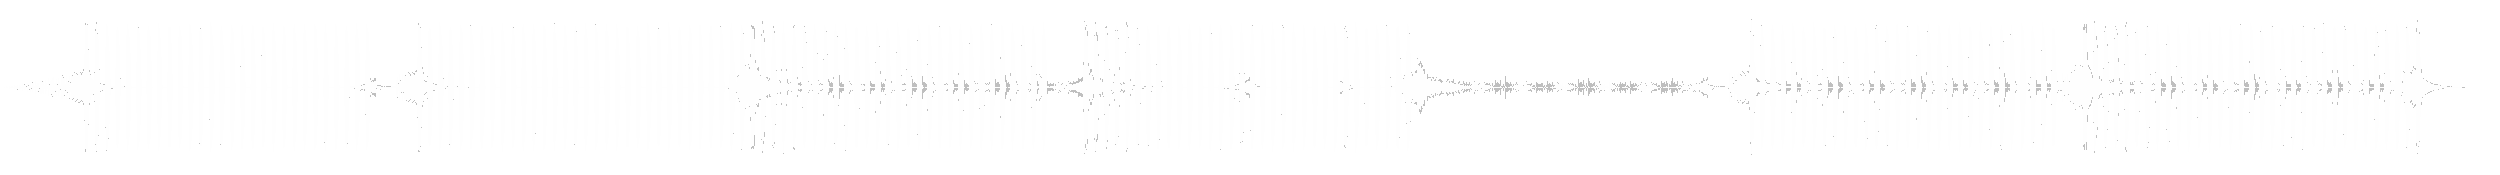 Waveform